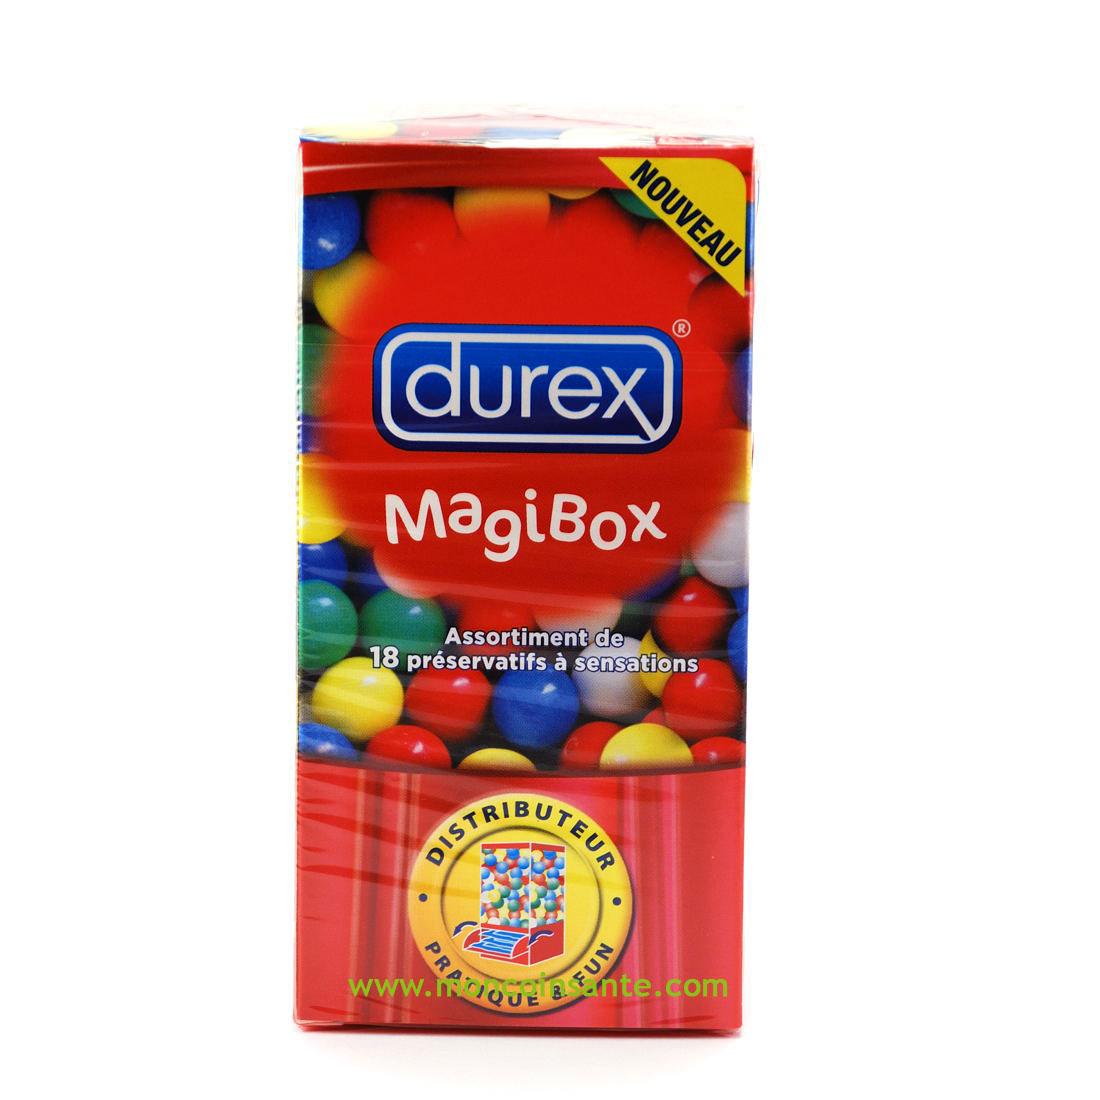 Foto Durex Magibox 18 Preservativos